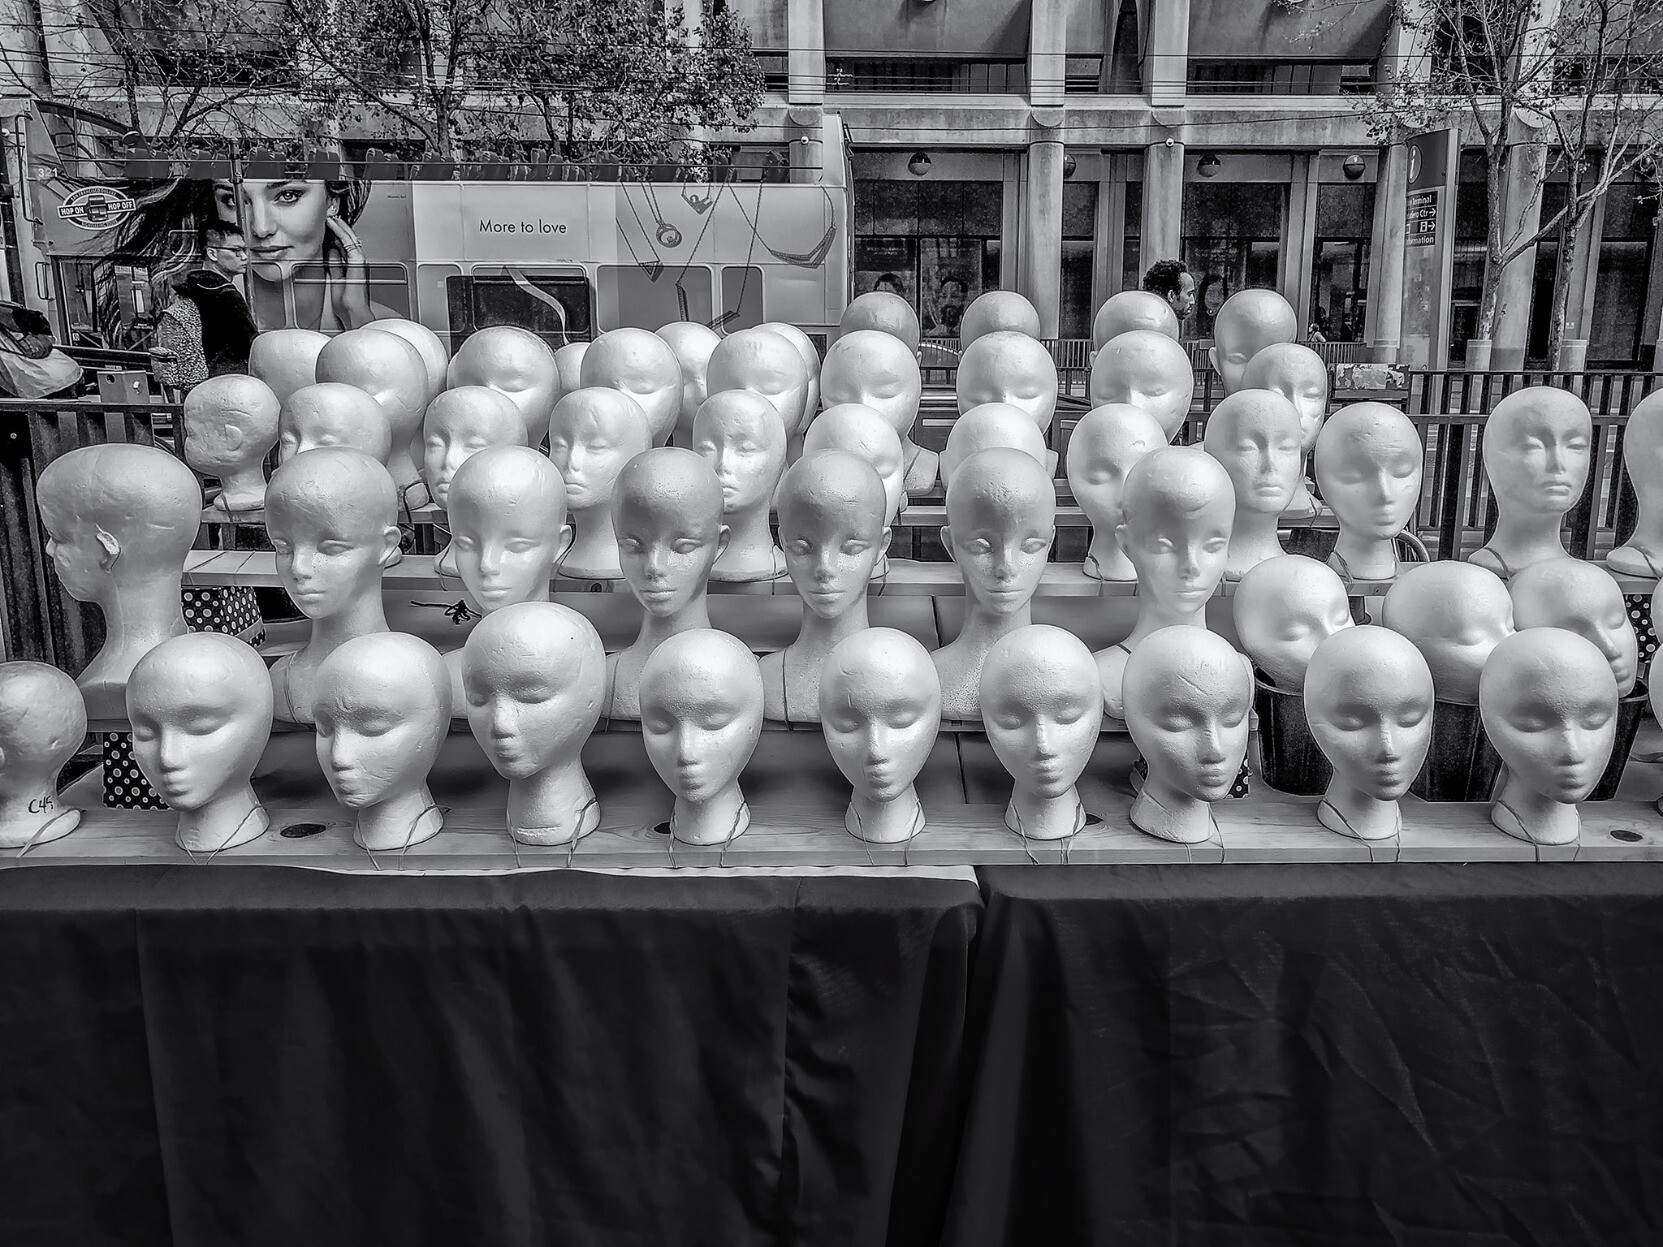 Styrofoam heads used for modeling caps on street vendor's table in San Francisco.